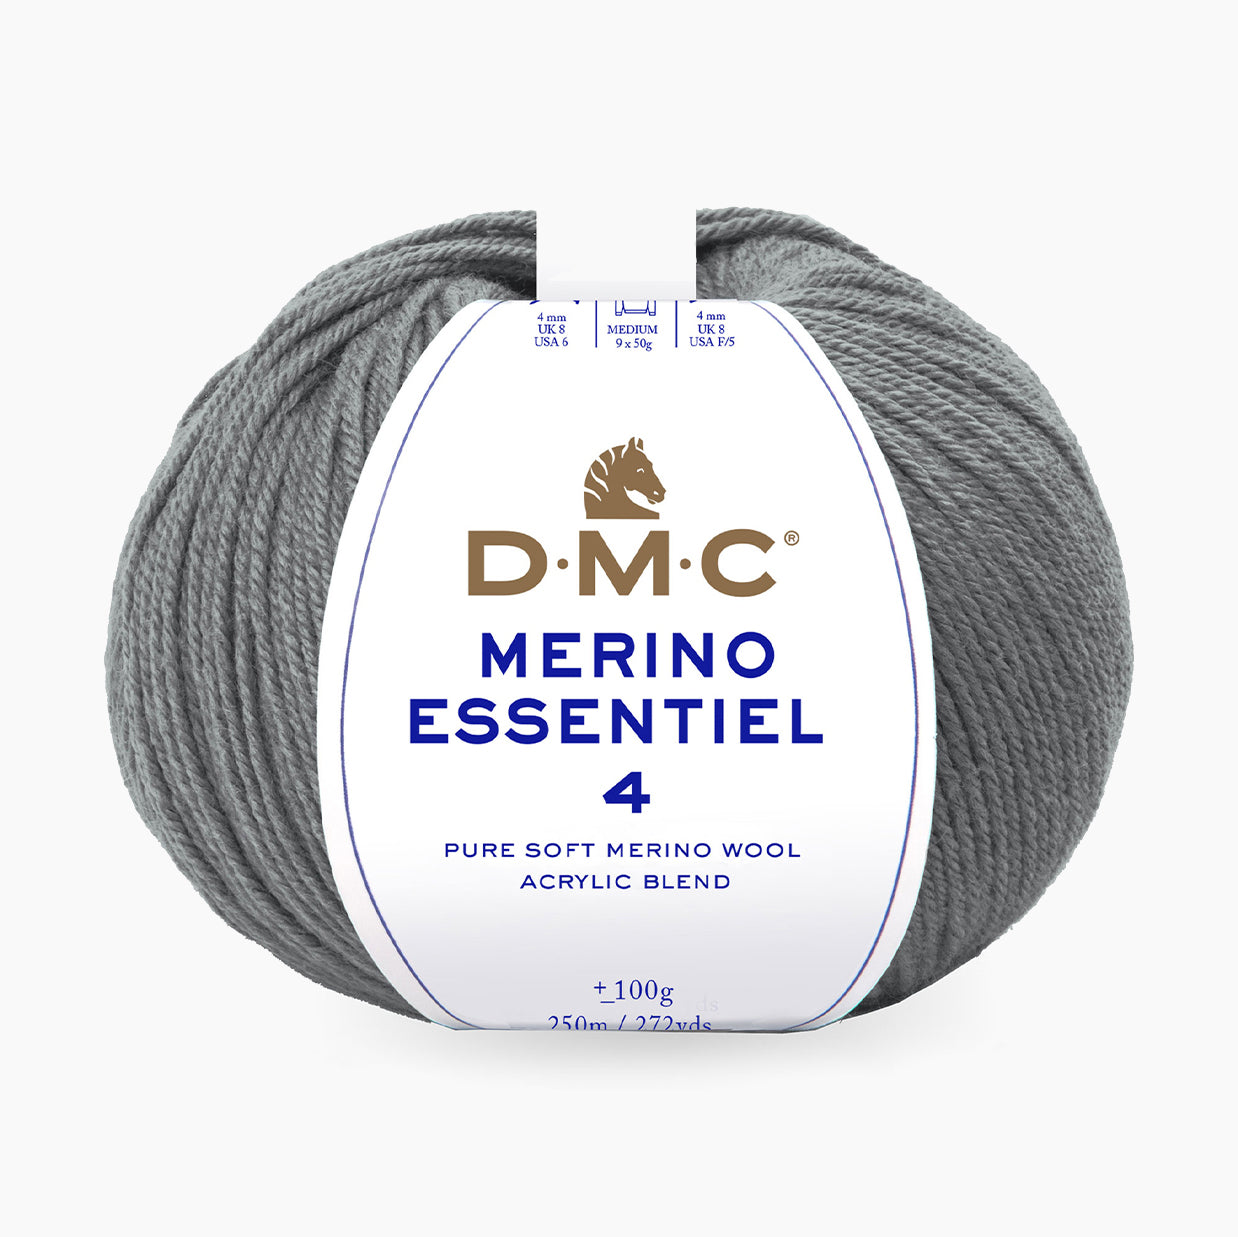 DMC Essentiel Merino Wool, soft and warm for winter garments